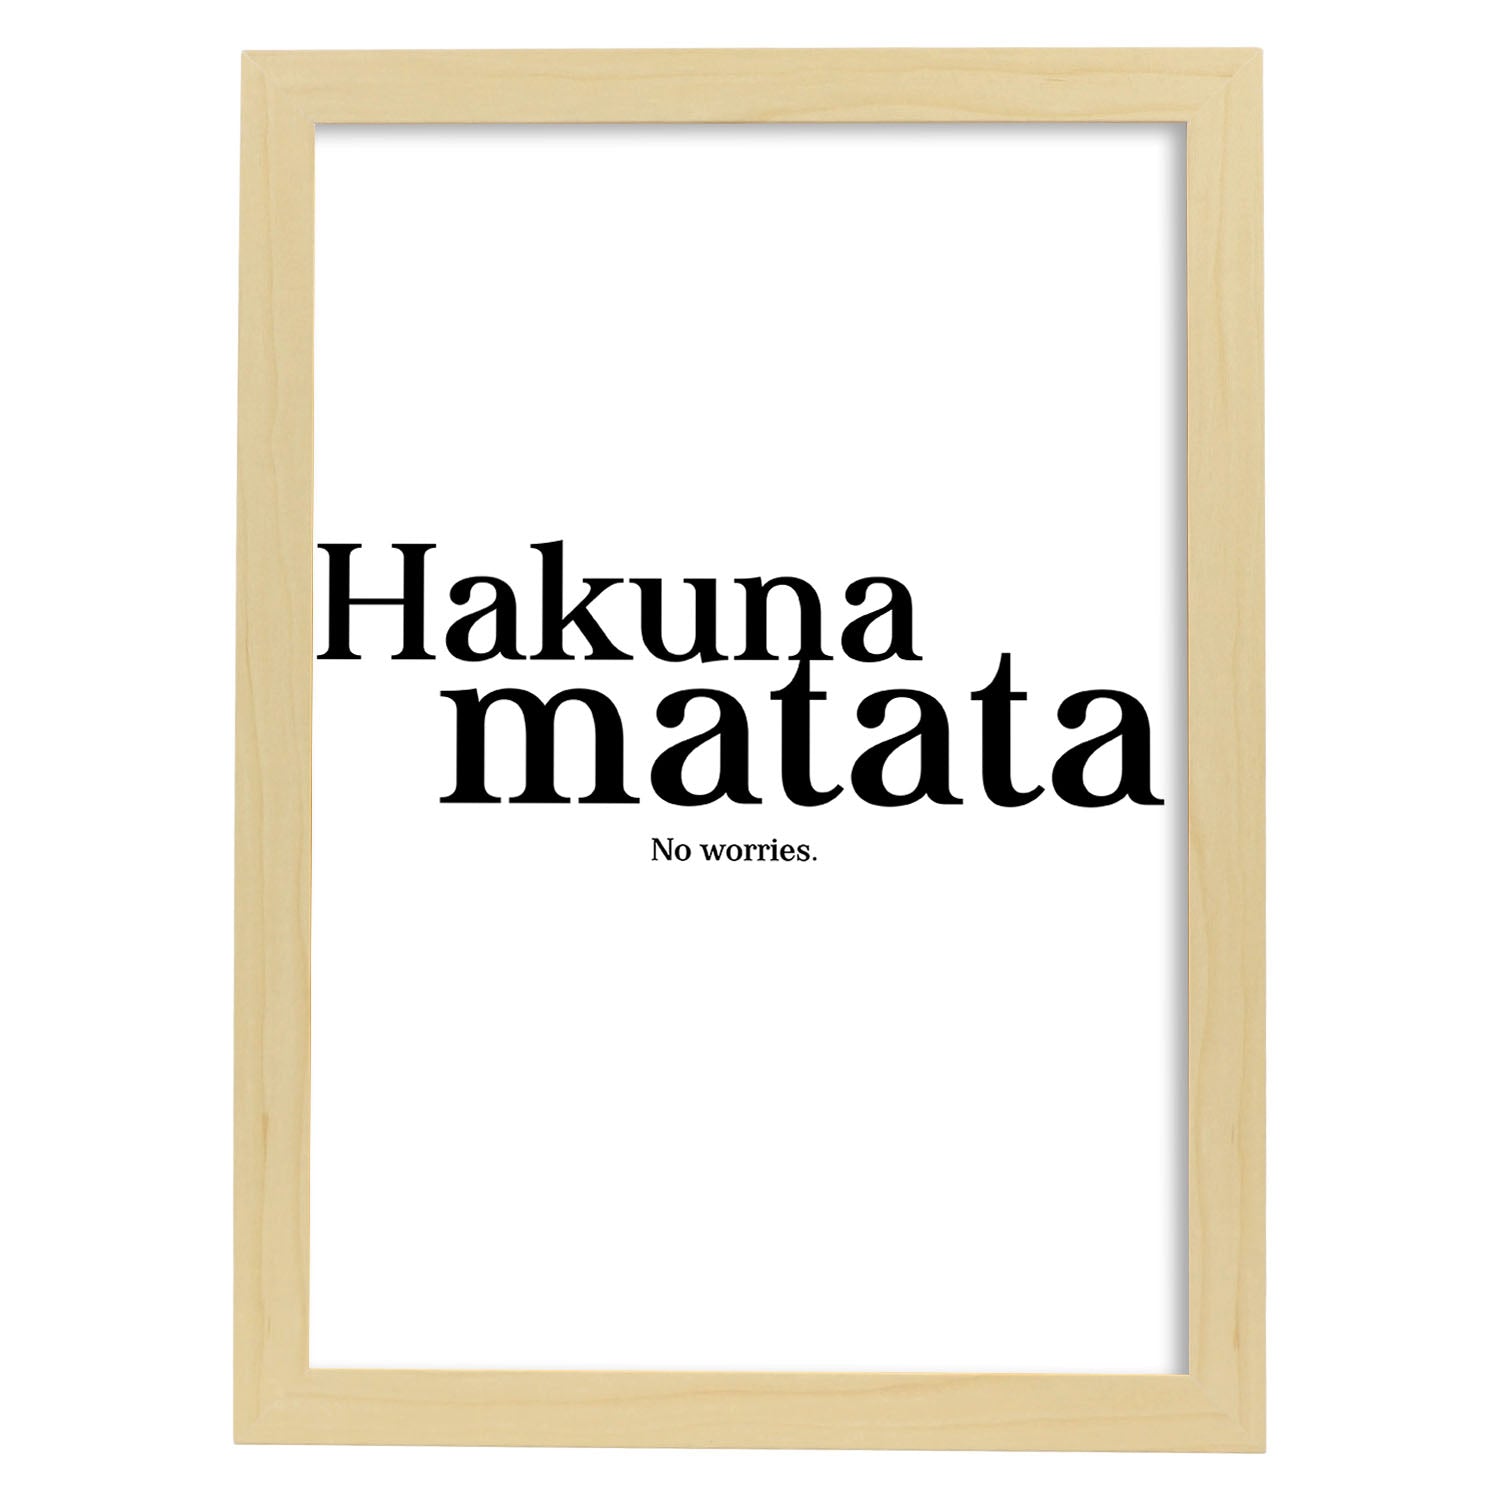 Lamina artistica decorativa con ilustración de hakuna matata estilo Mensaje inspiracional-Artwork-Nacnic-A3-Marco Madera clara-Nacnic Estudio SL